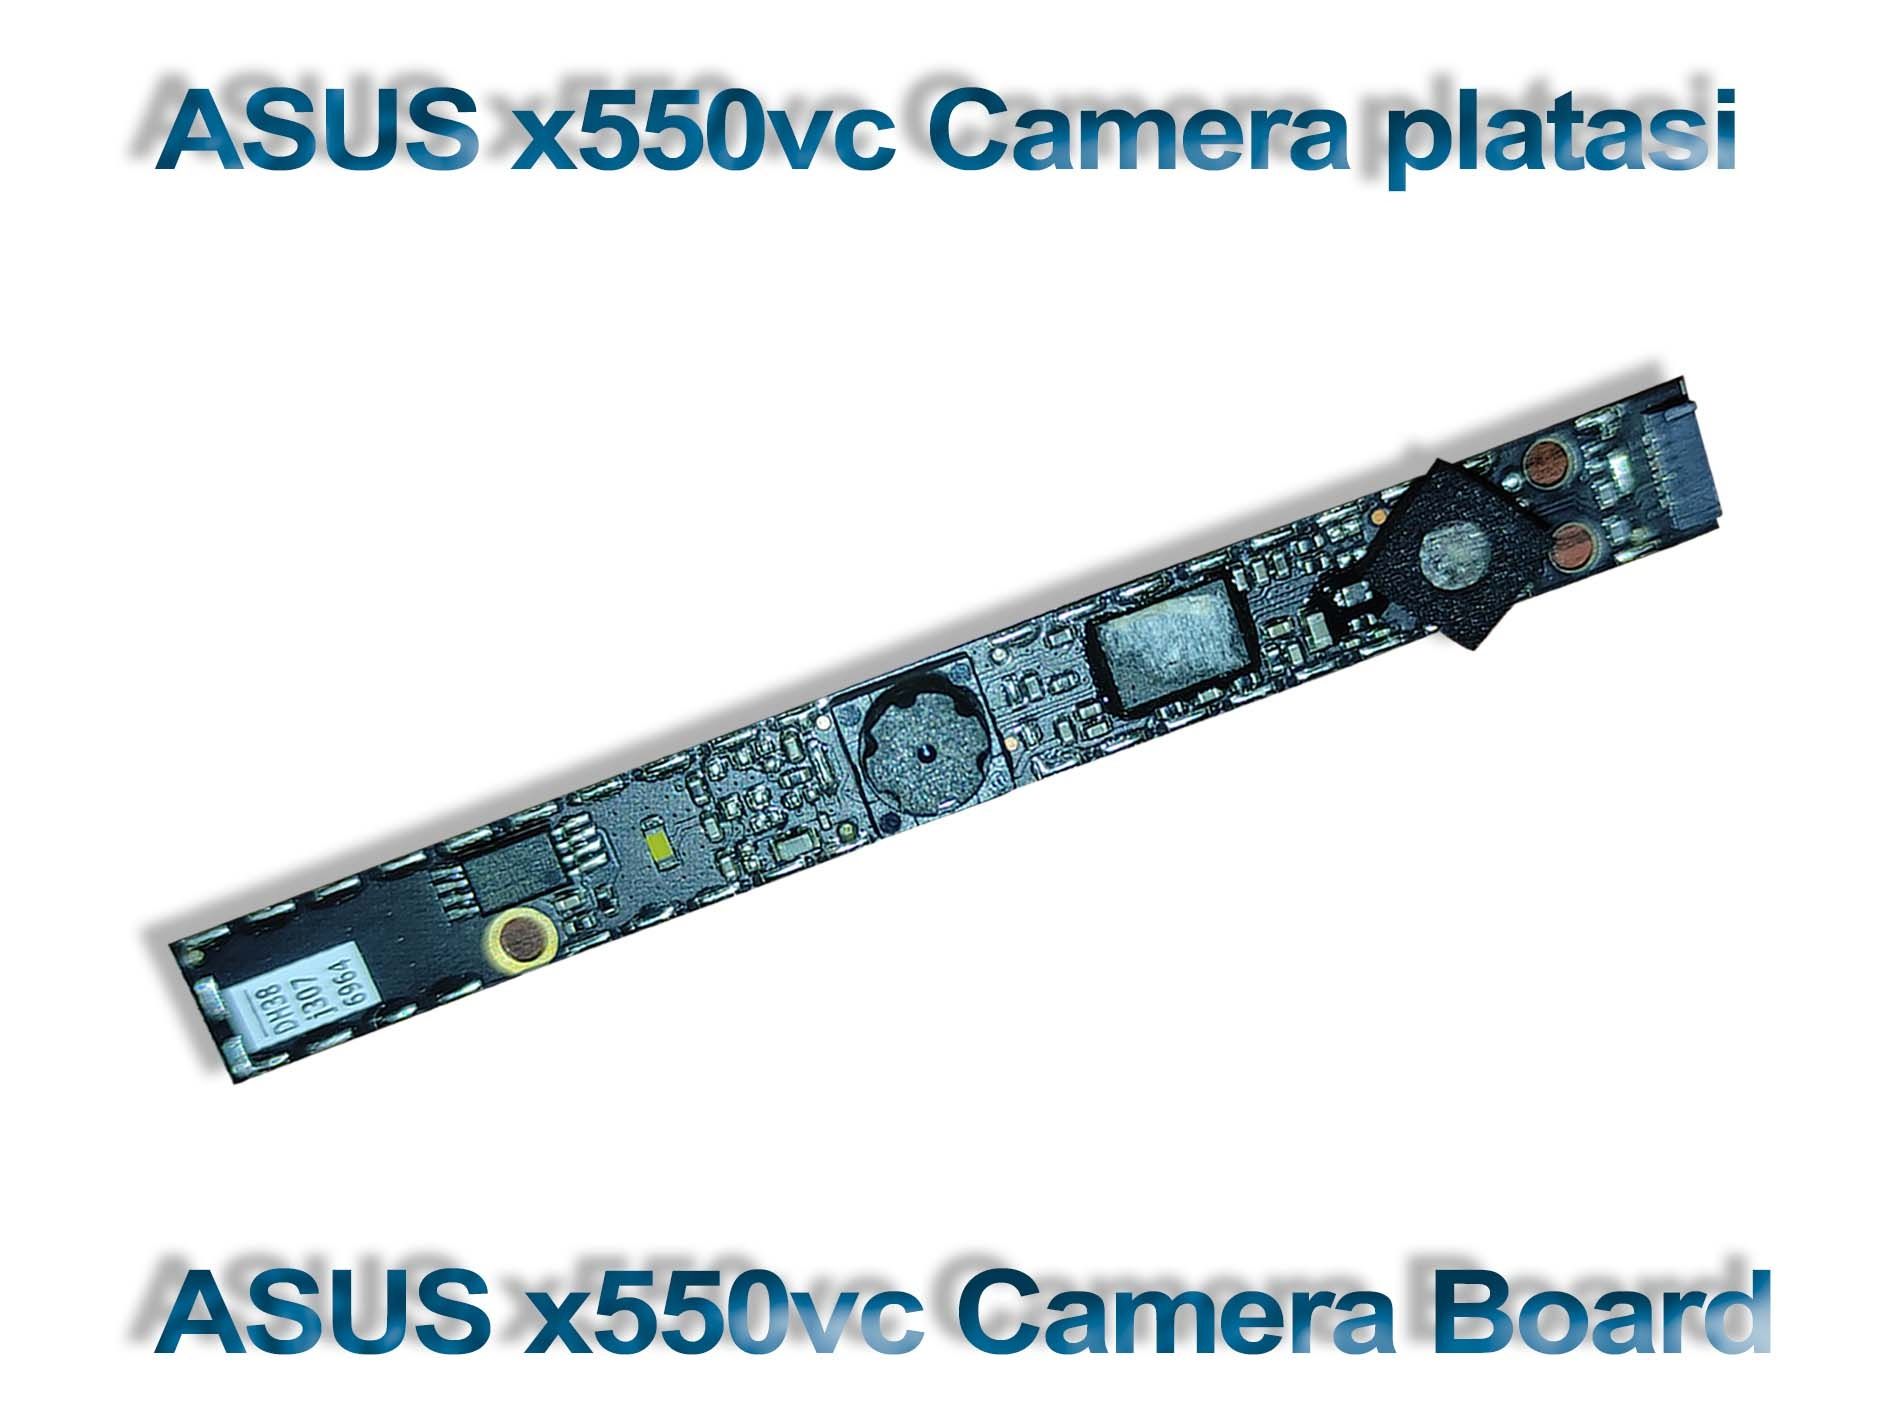 ASUS x550vc Web Camera